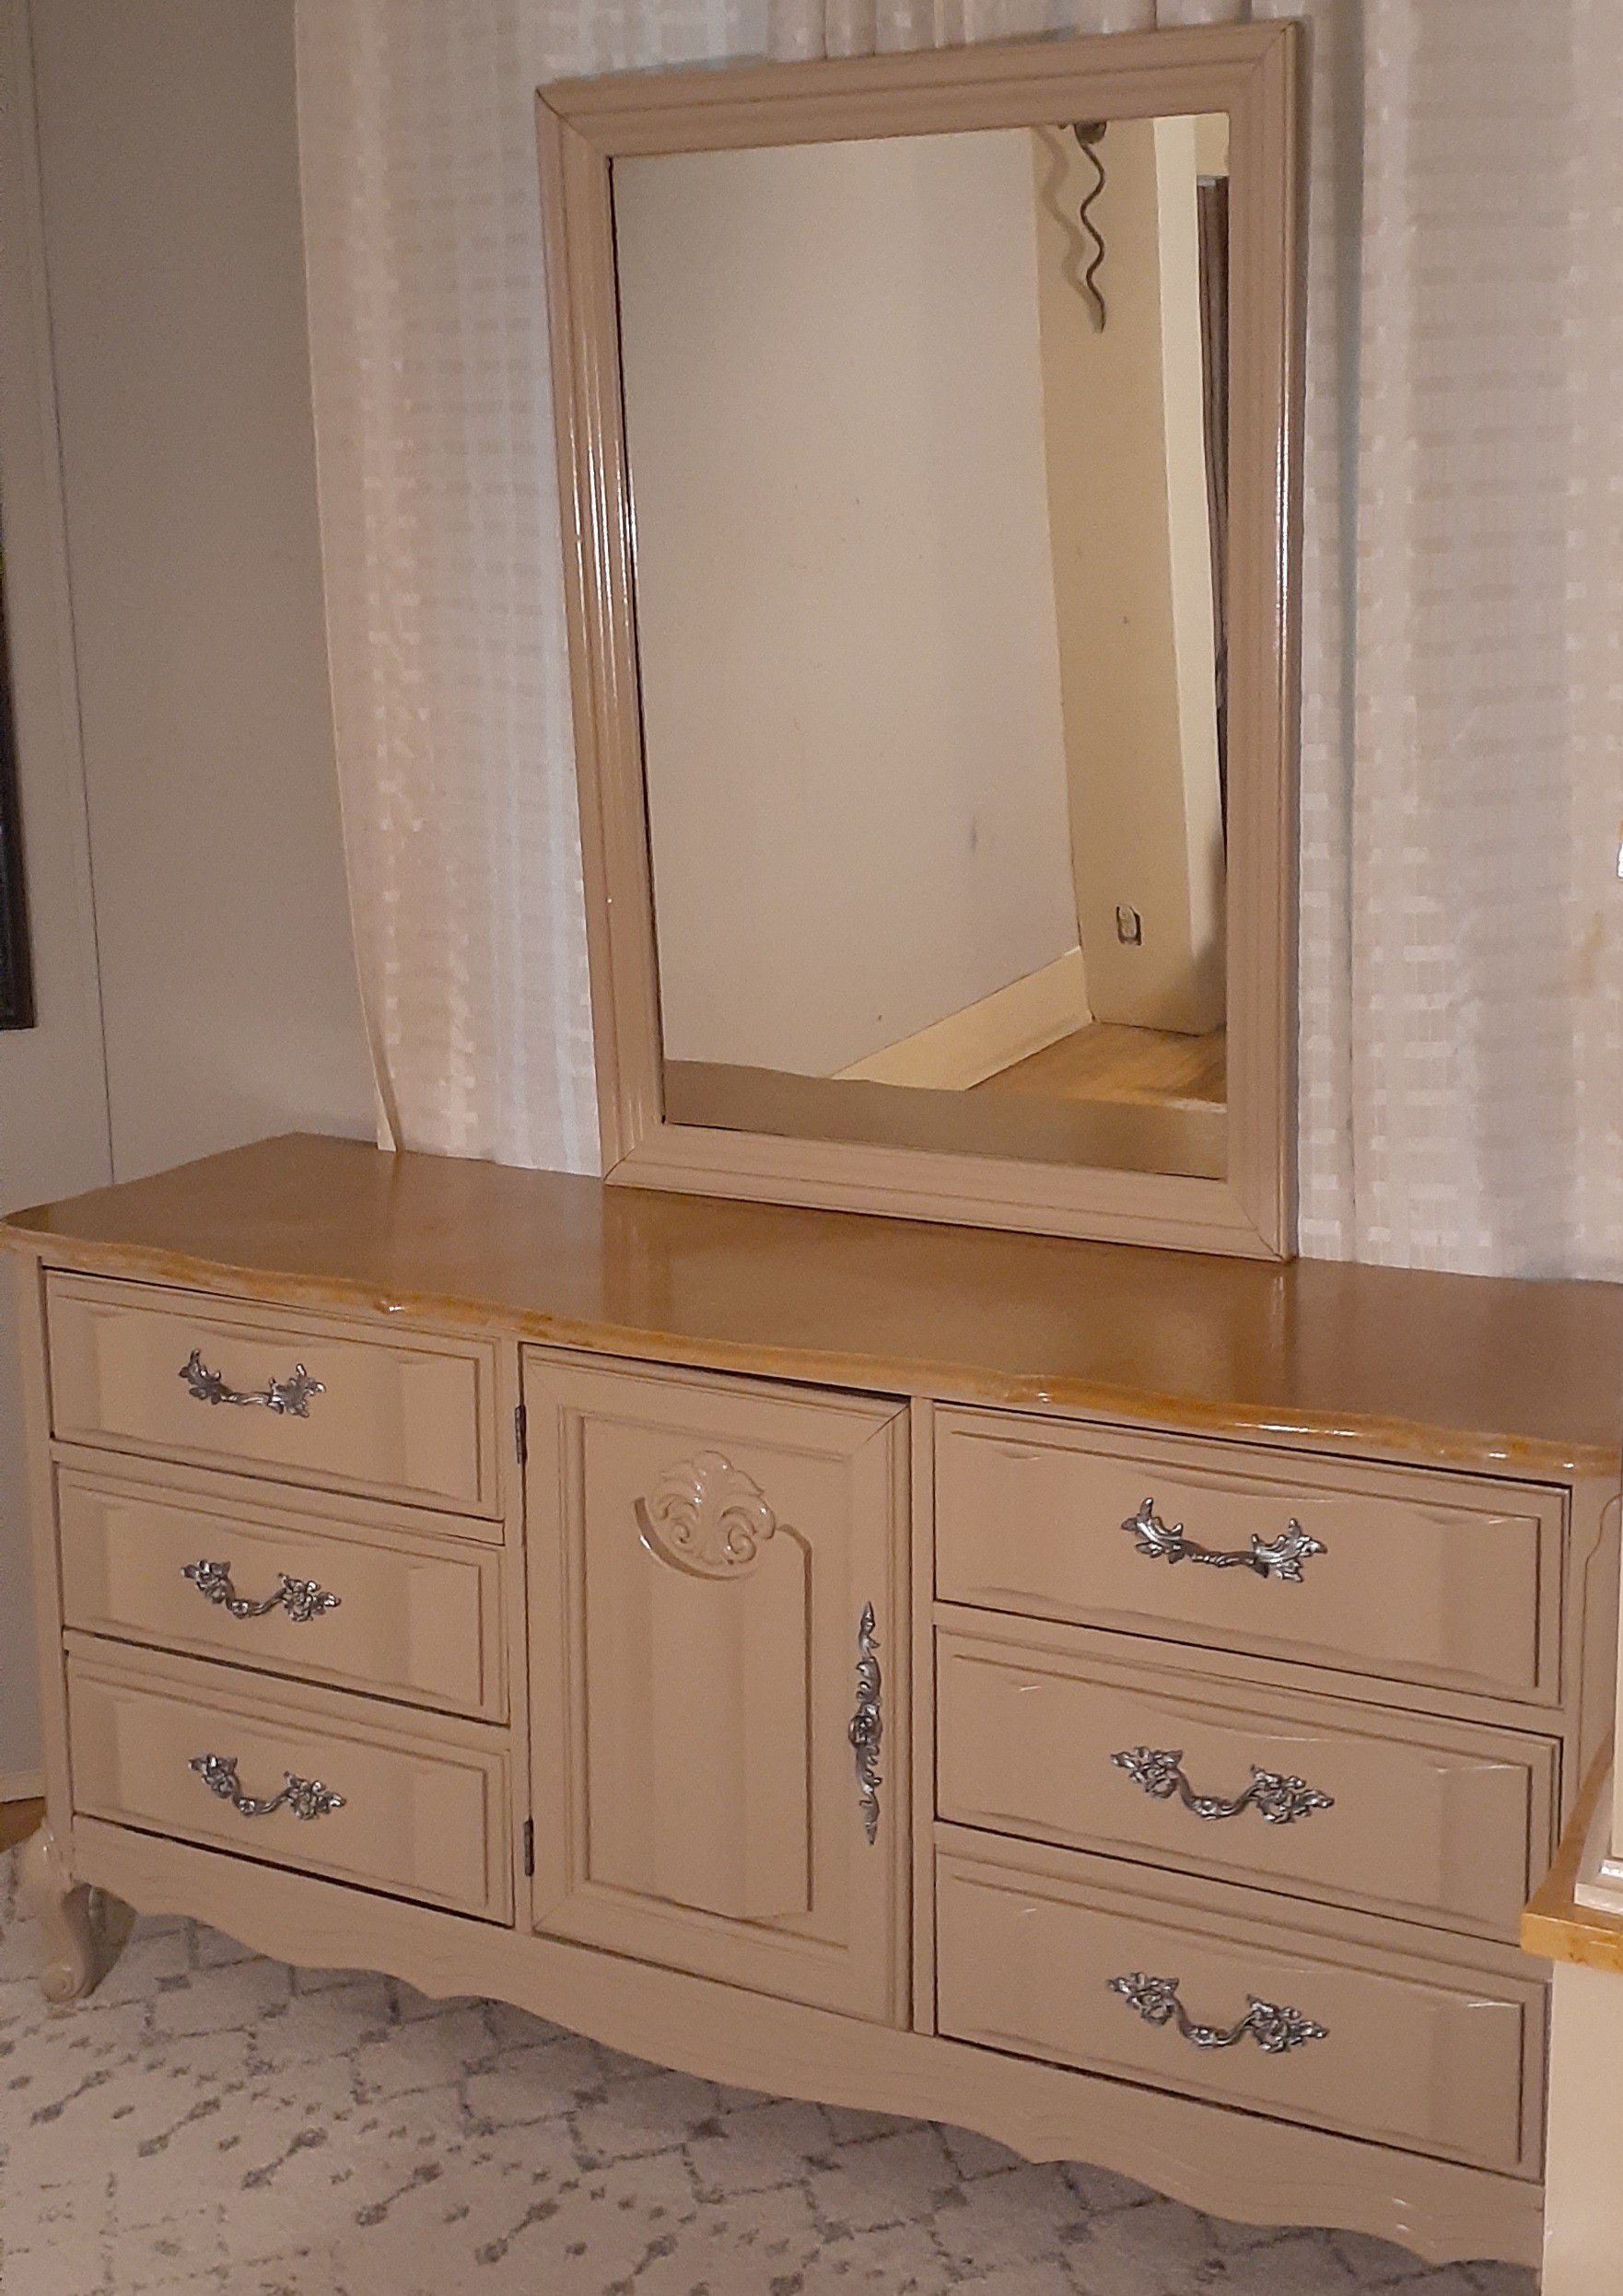 Dresser and mirror refurbished